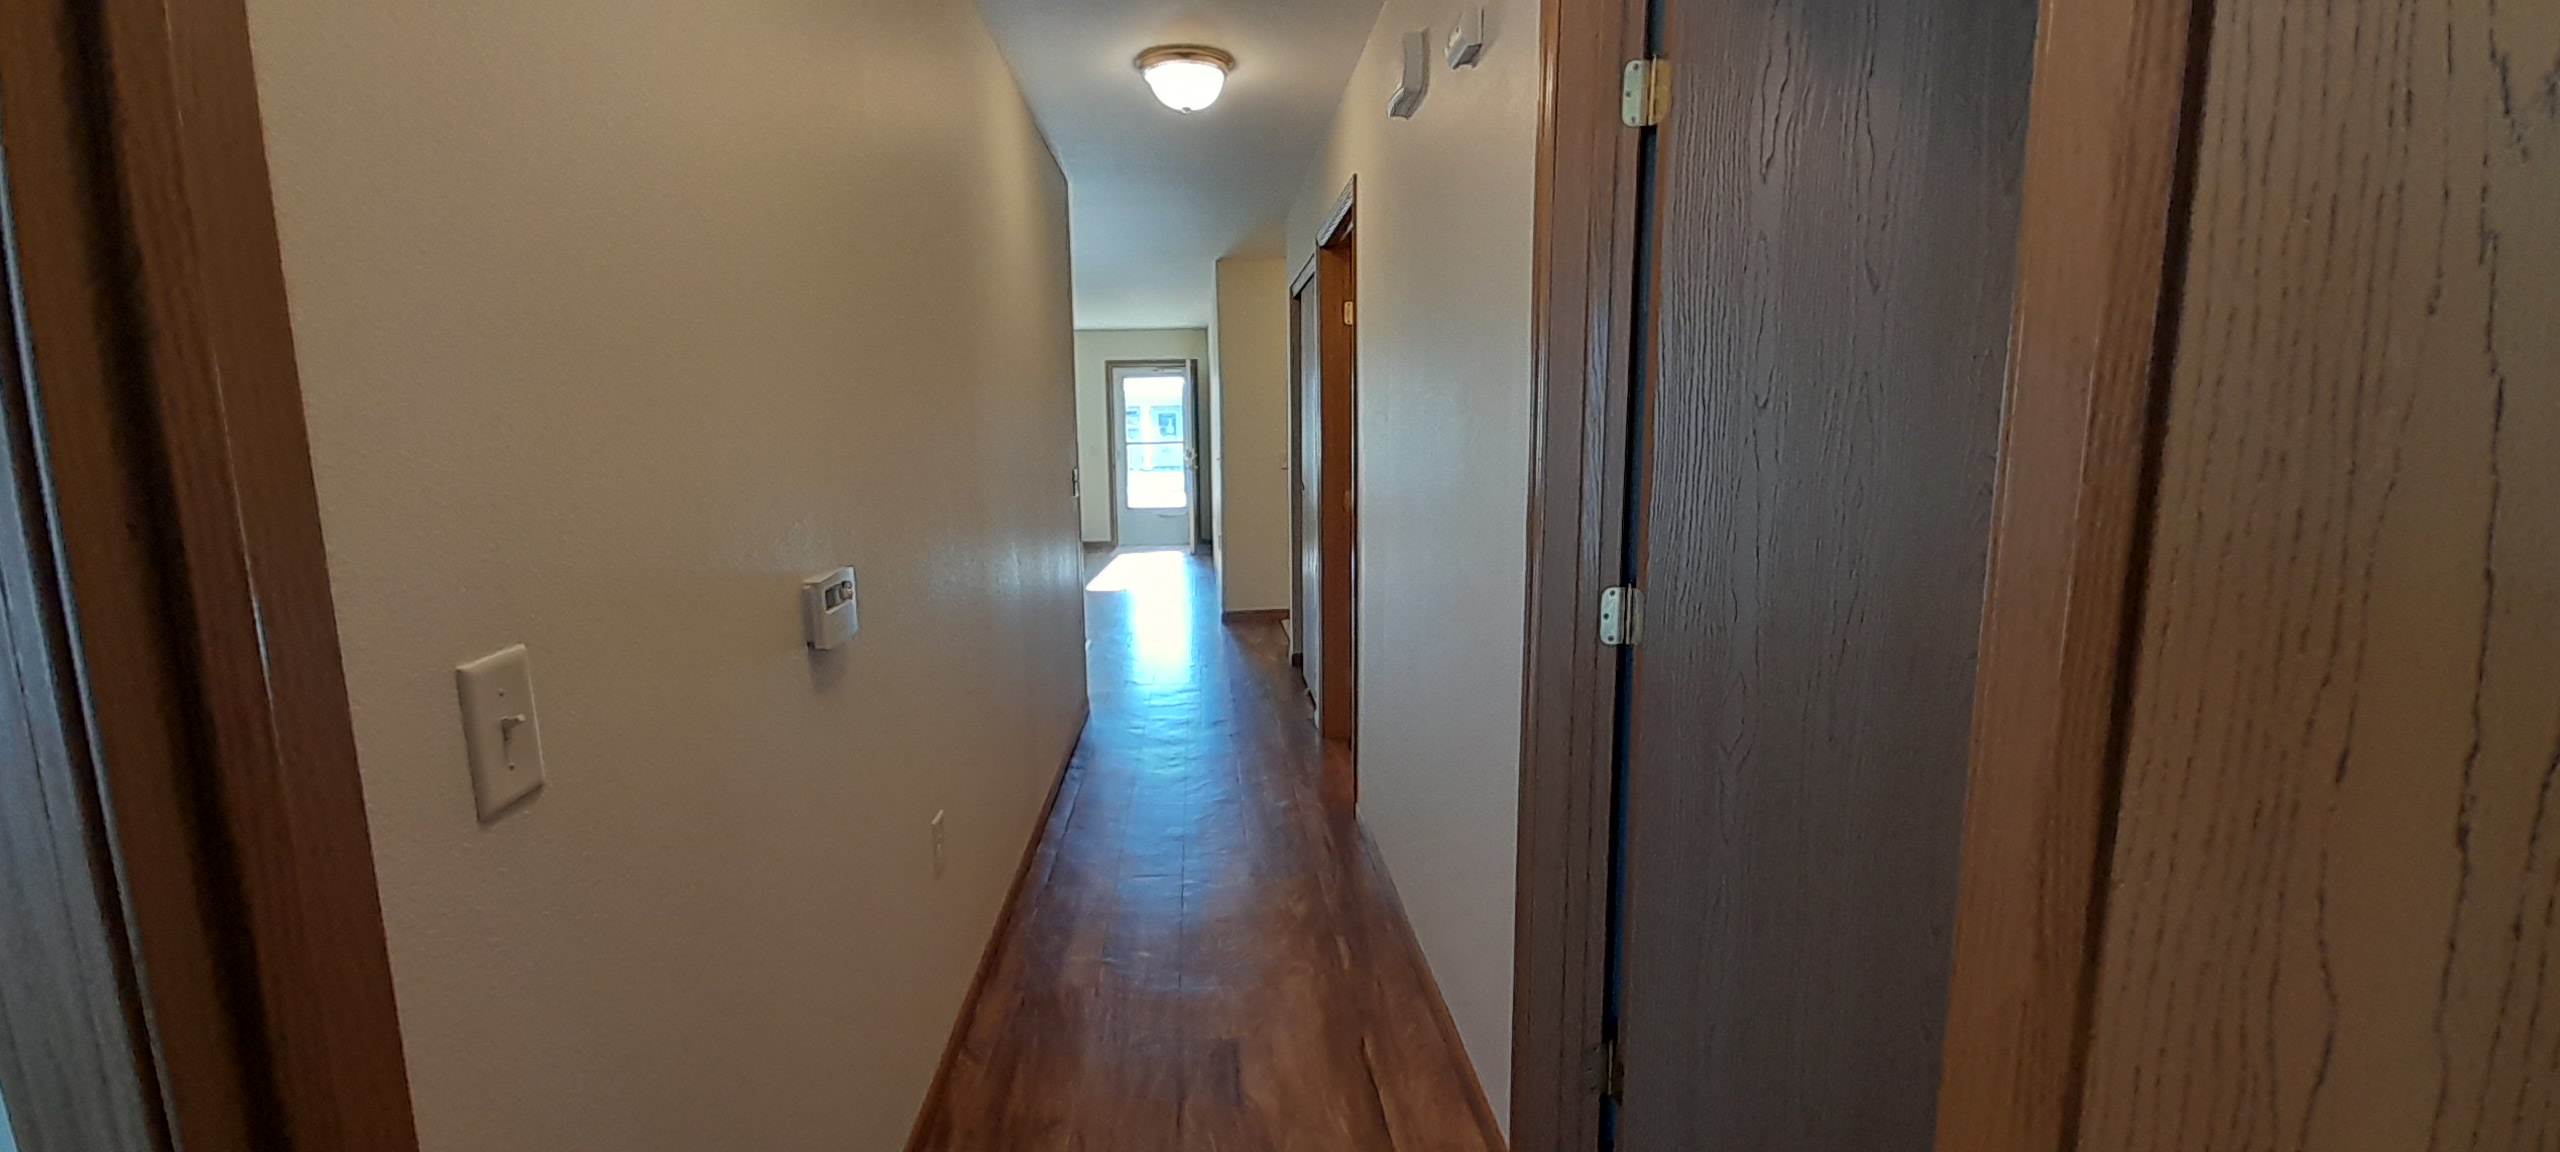 Iola SV hallway looking from bedroom